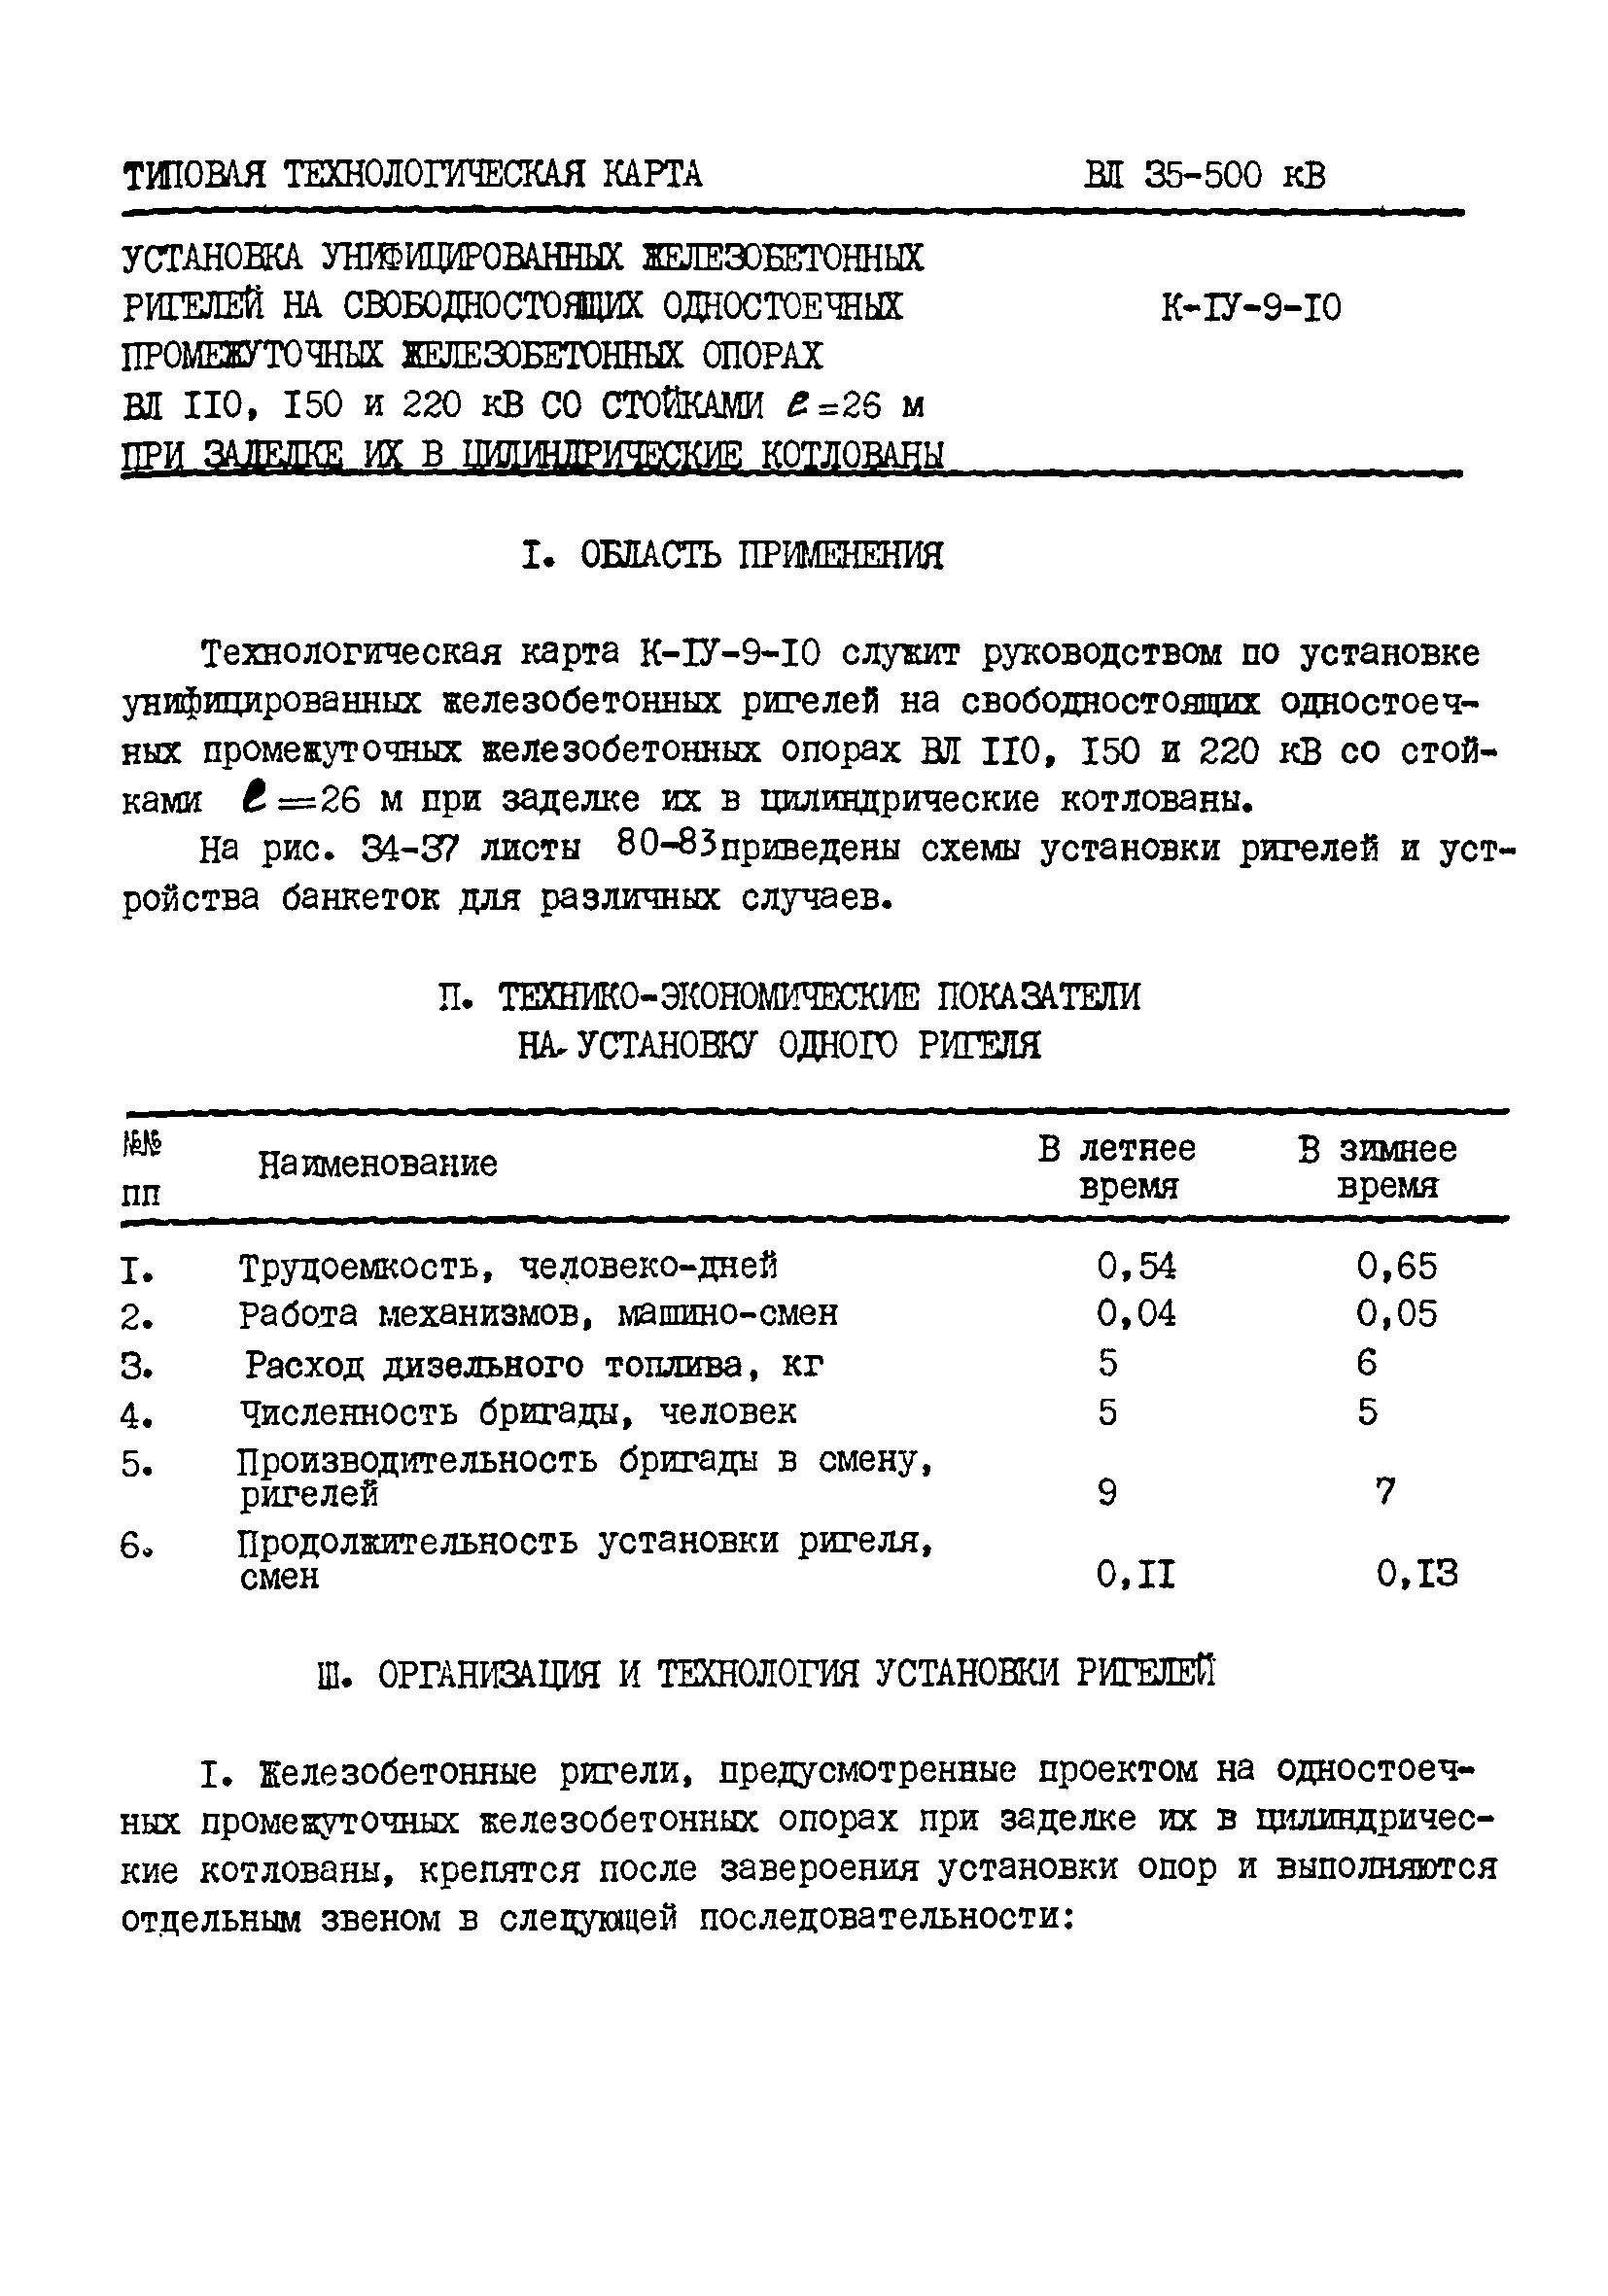 ТТК К-IV-9-10